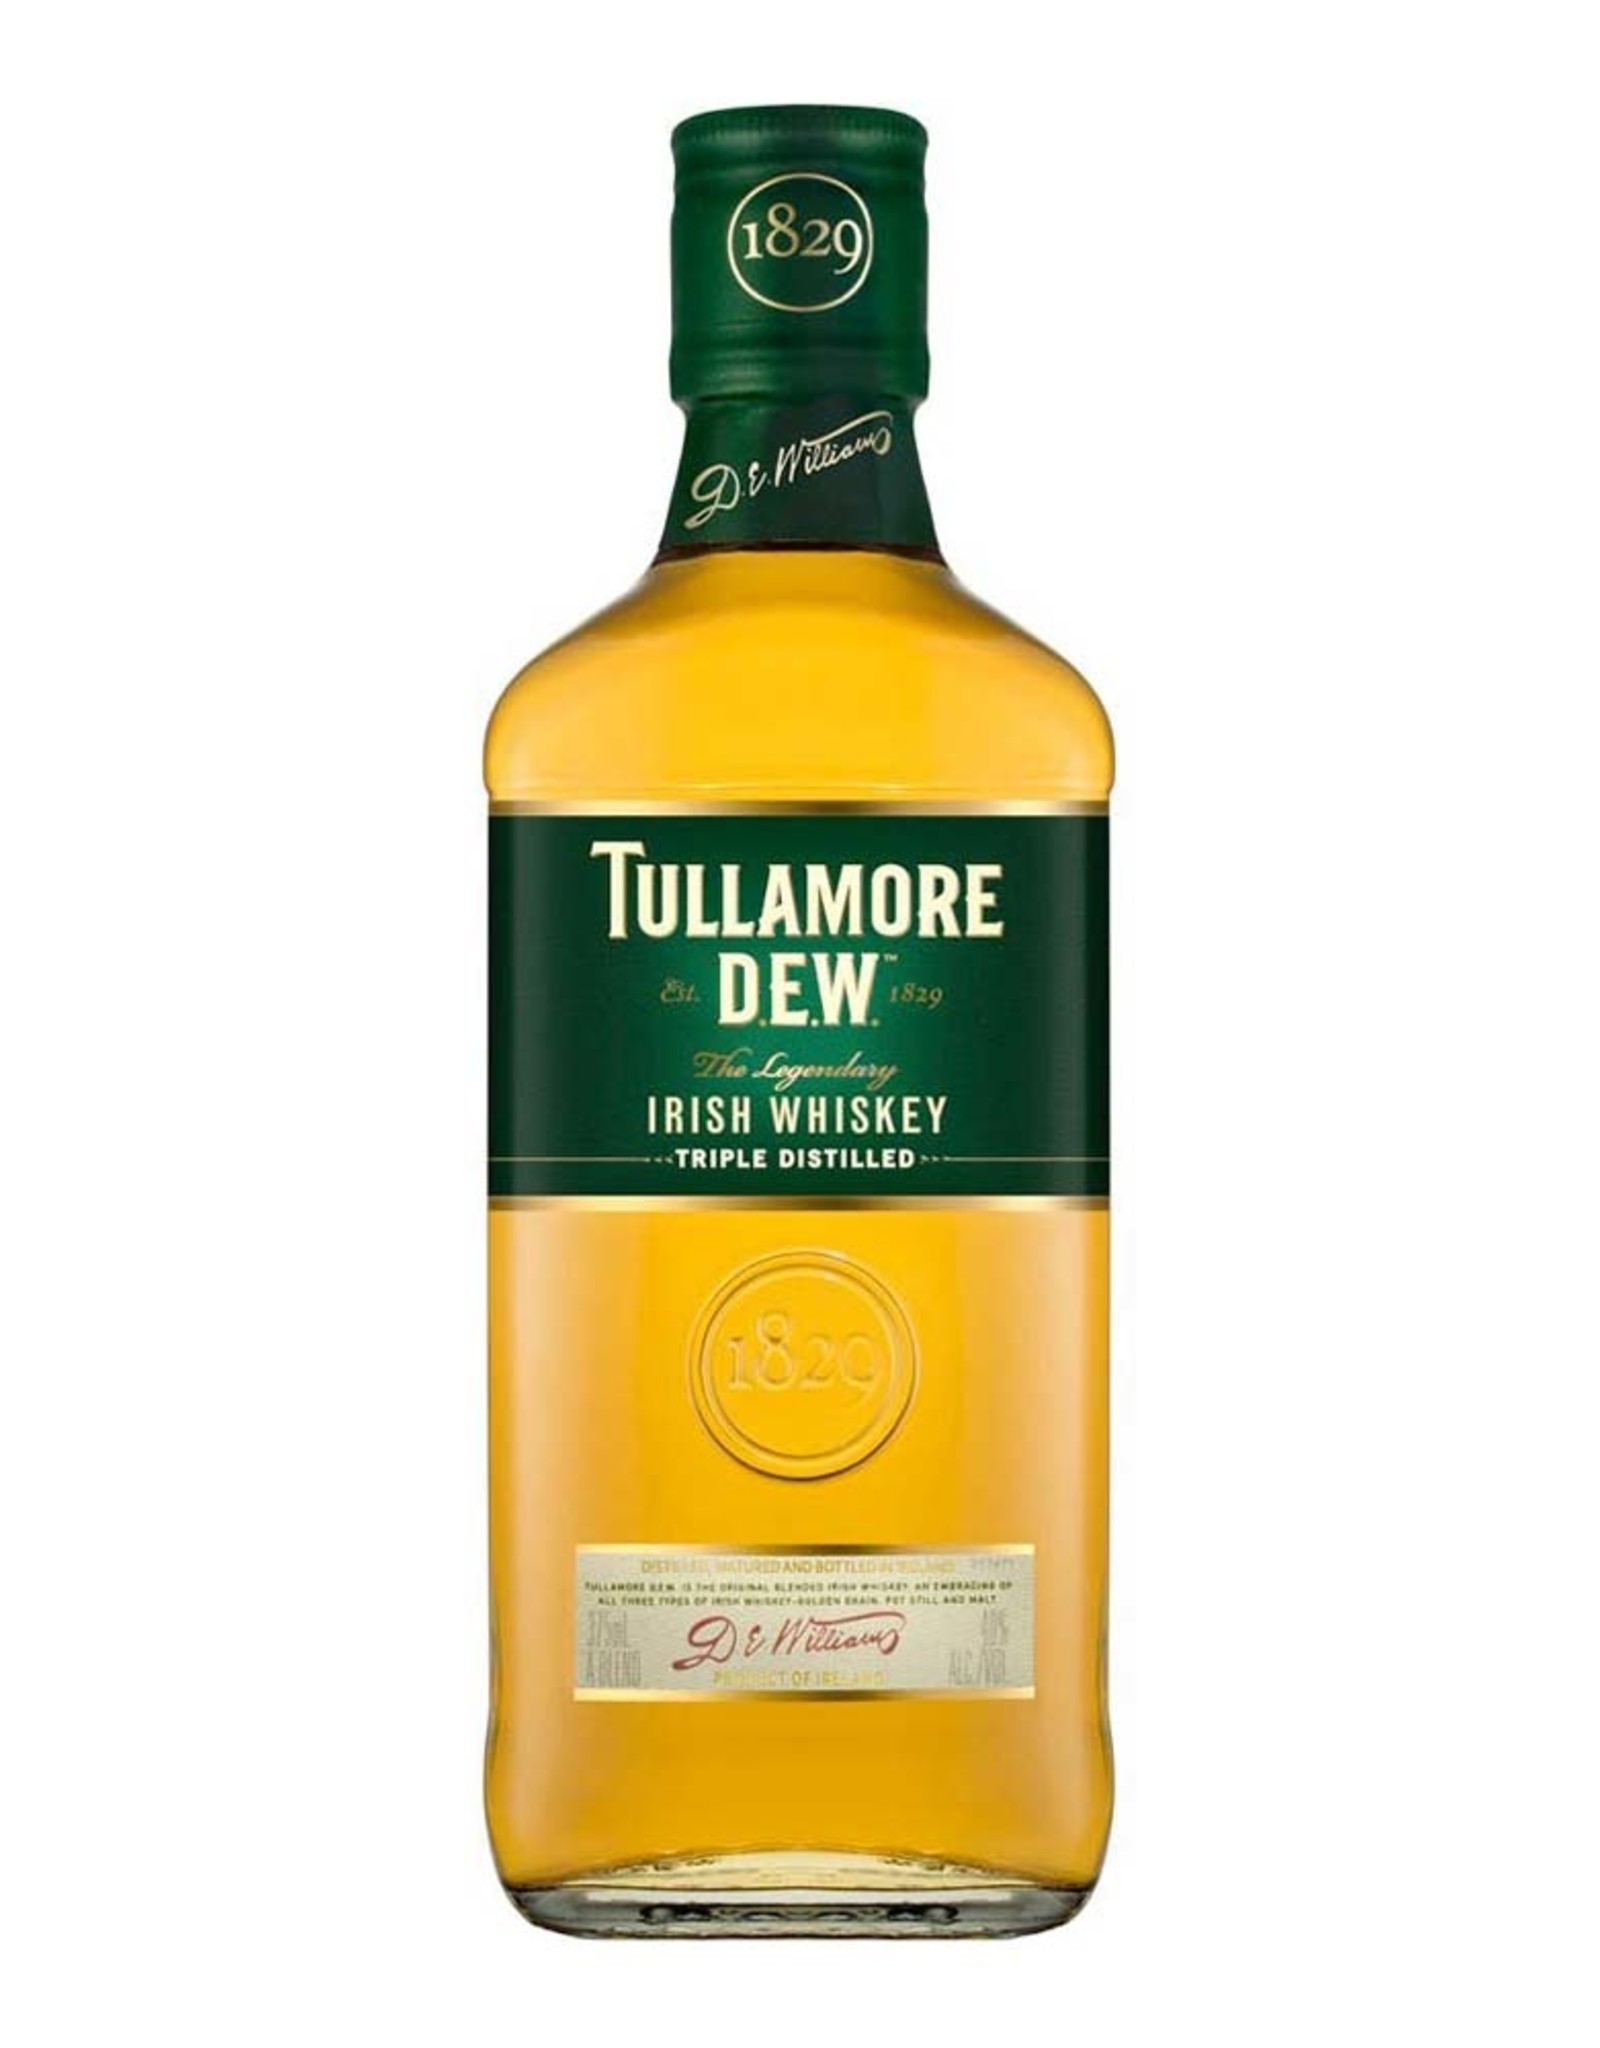 Tullamore Dew 375ml